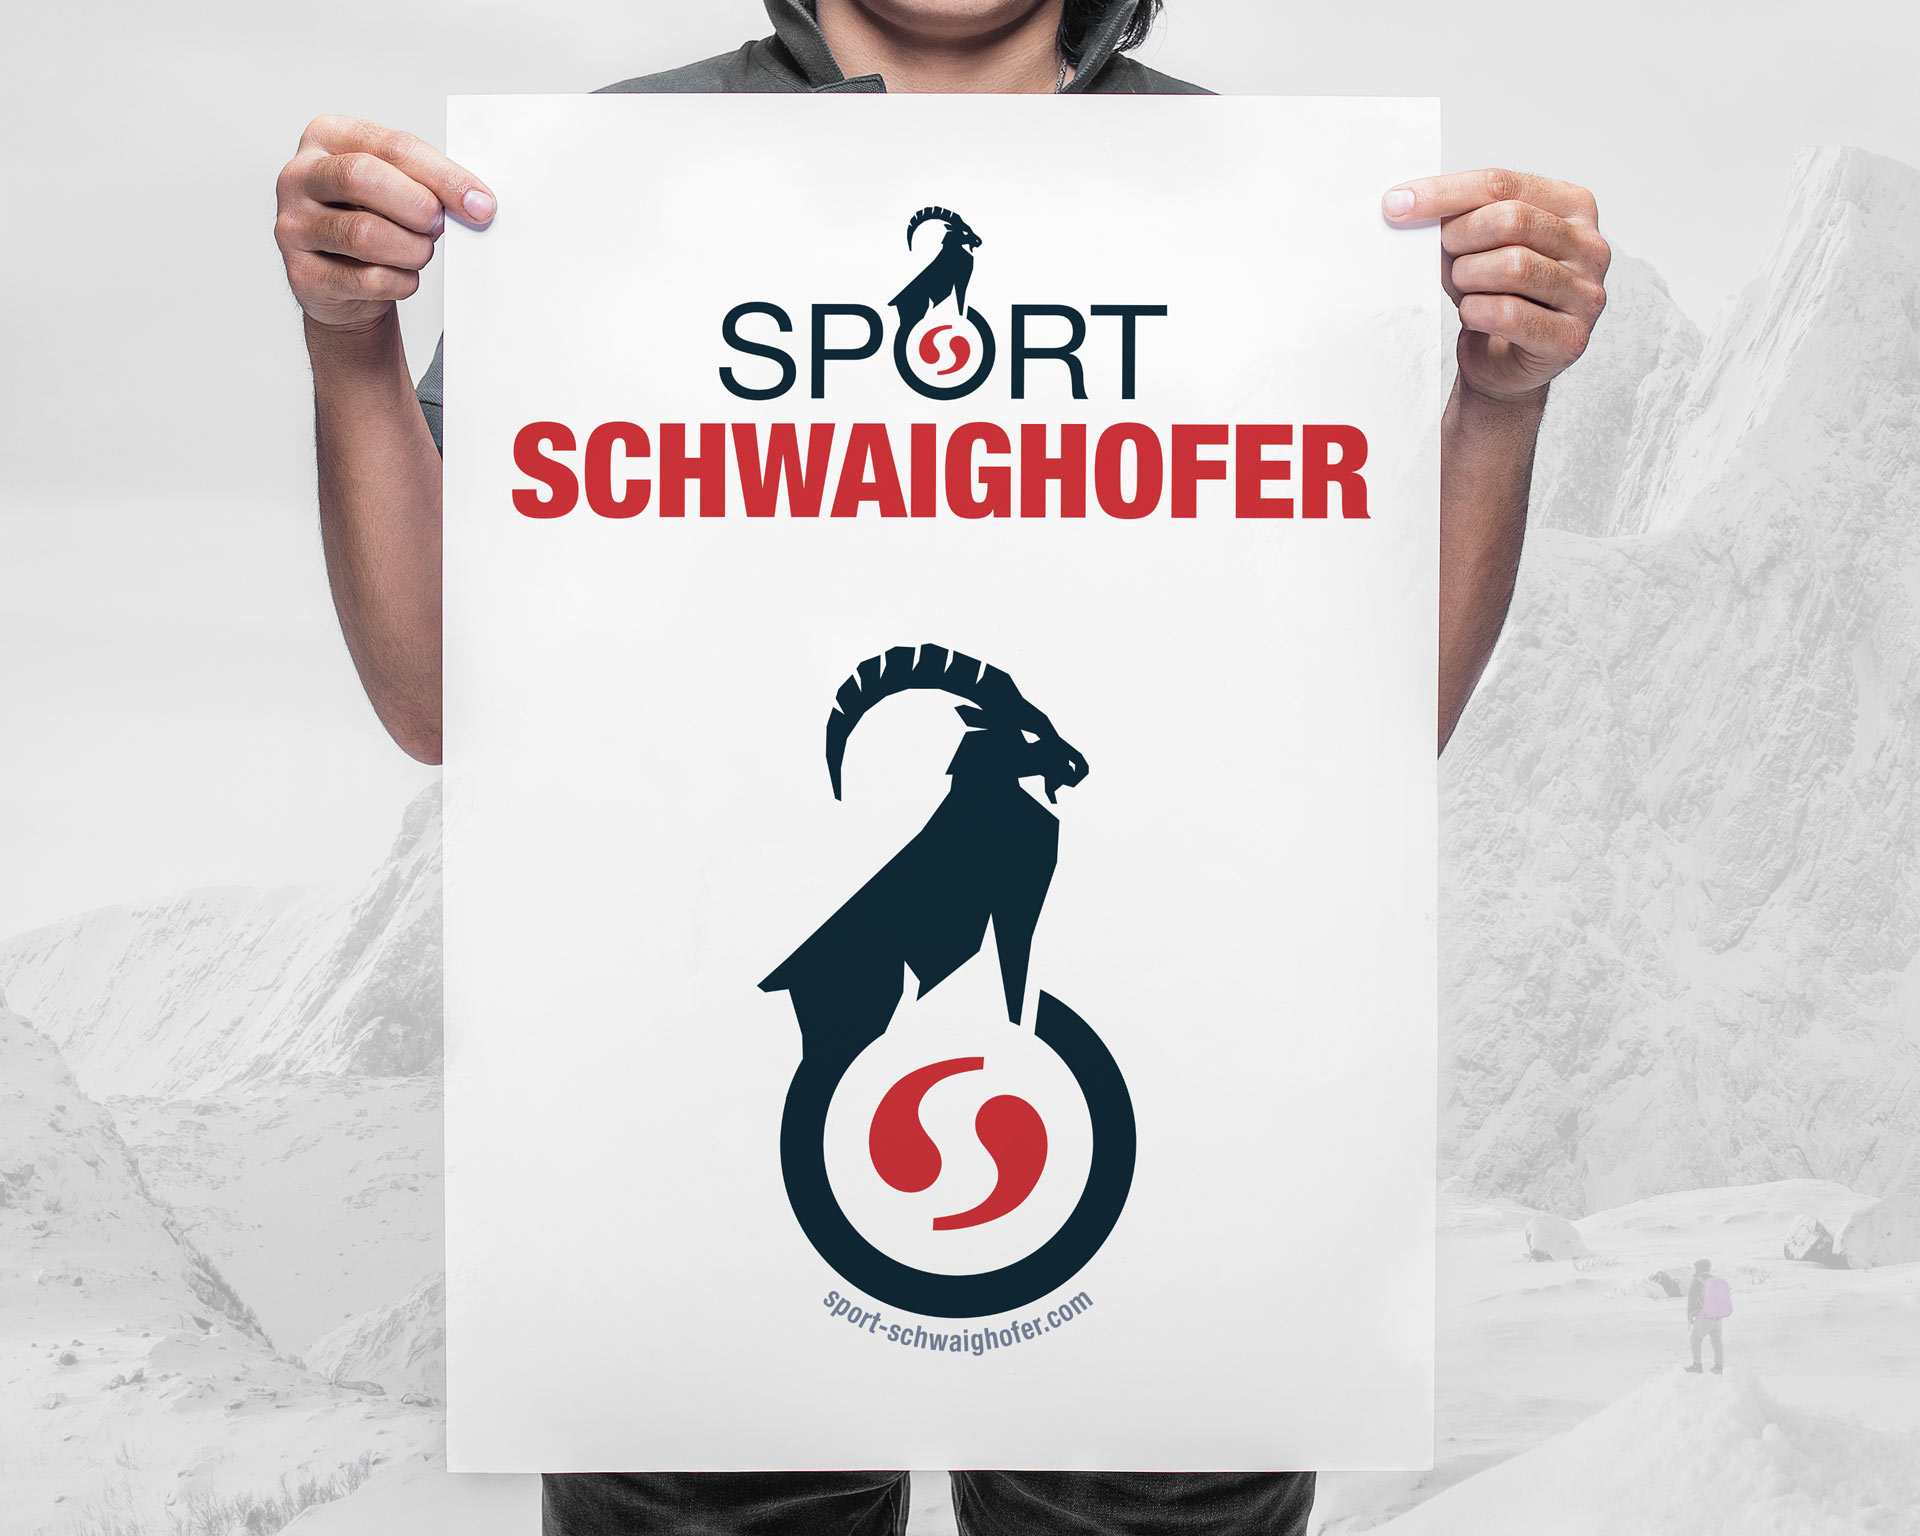 agentur 13, Werbeagentur Tirol, Sport Schwaighofer, Logodesign